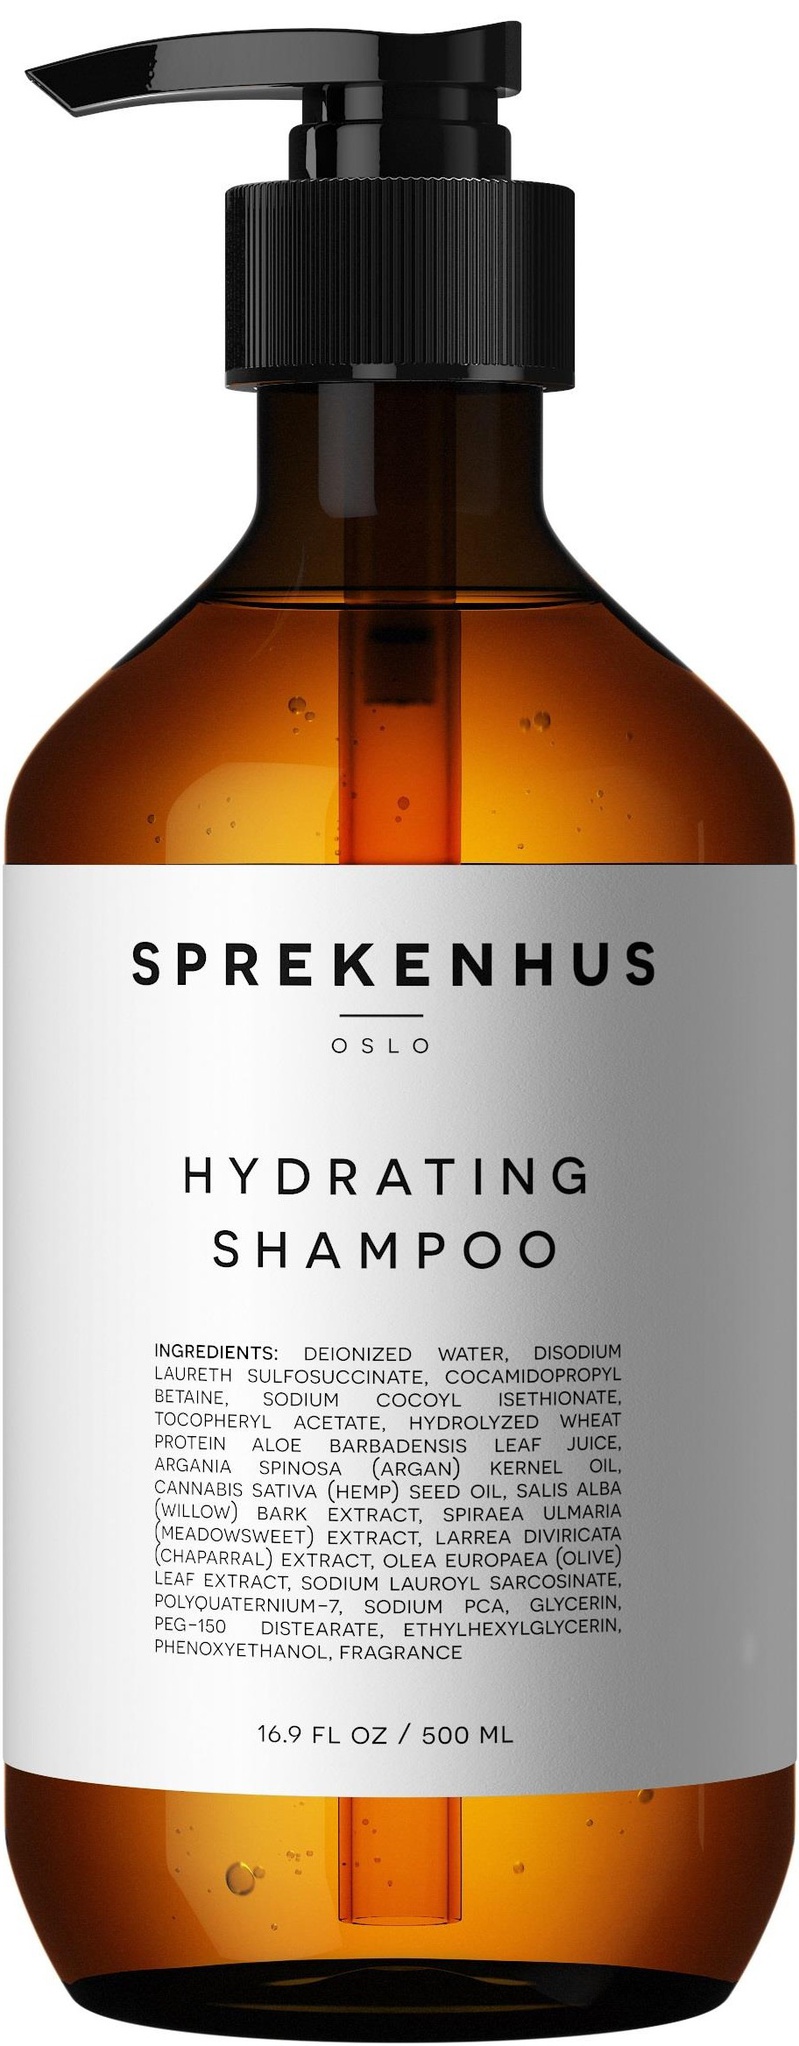 Sprekenhus Hydrating Shampoo Large